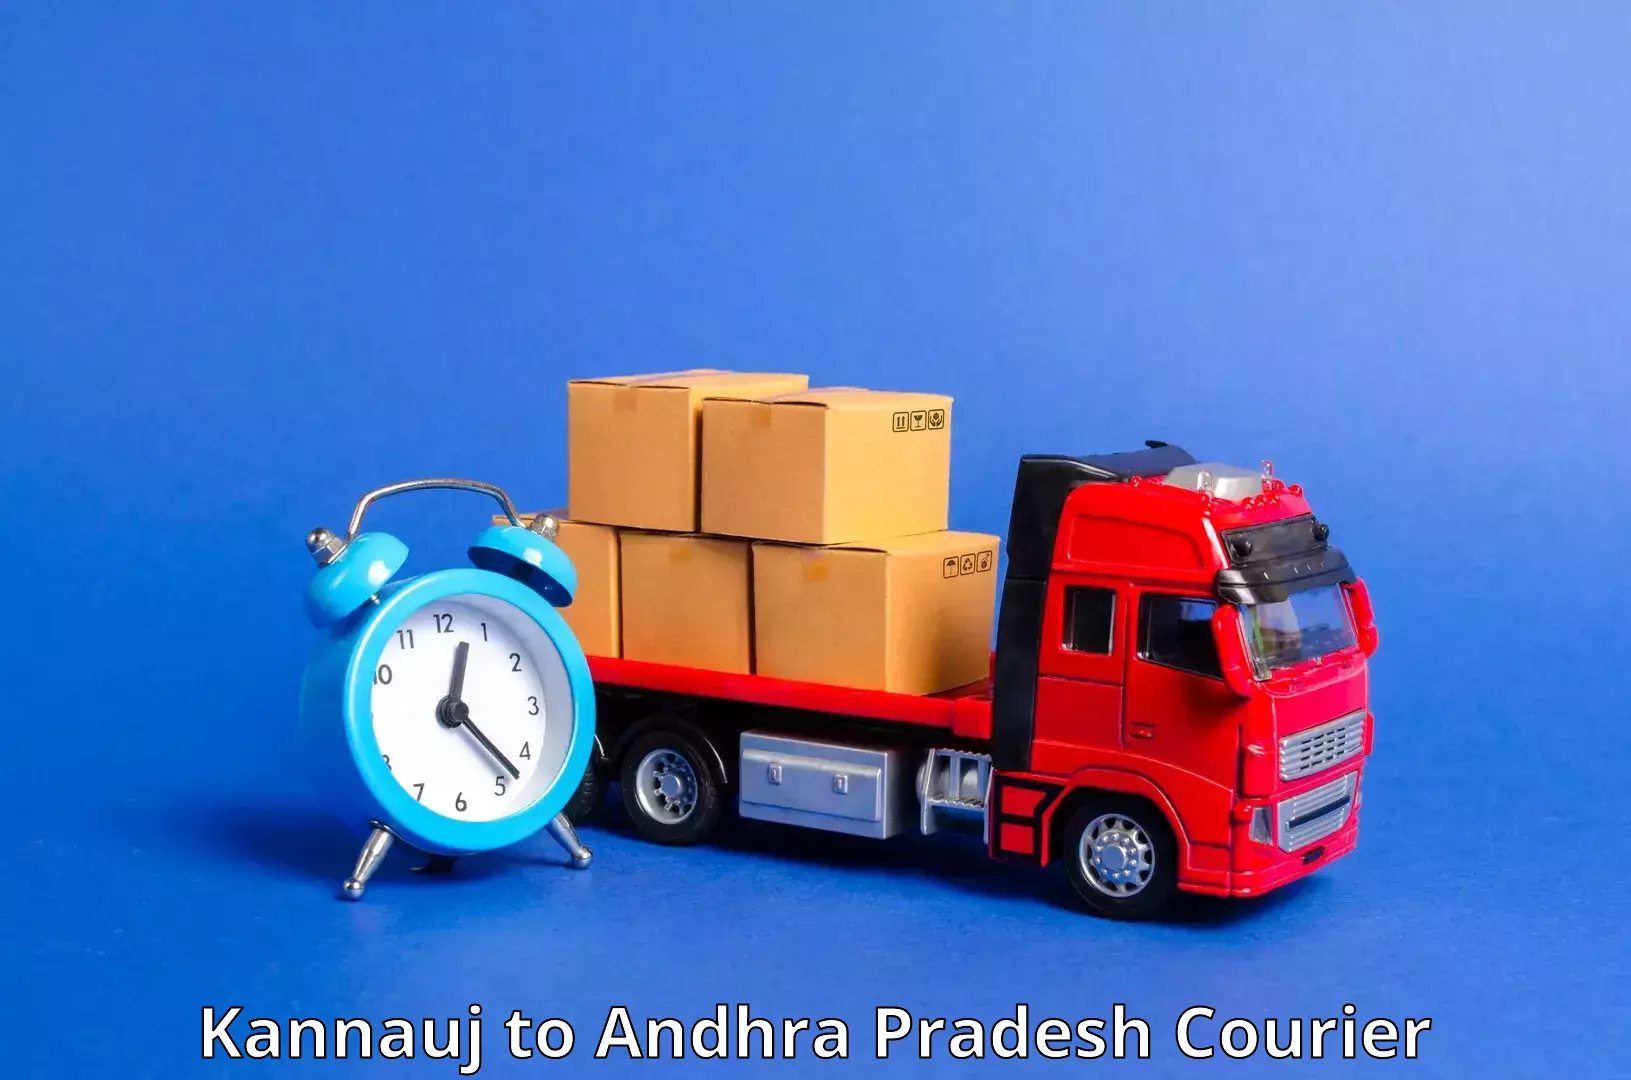 Efficient order fulfillment Kannauj to Amalapuram